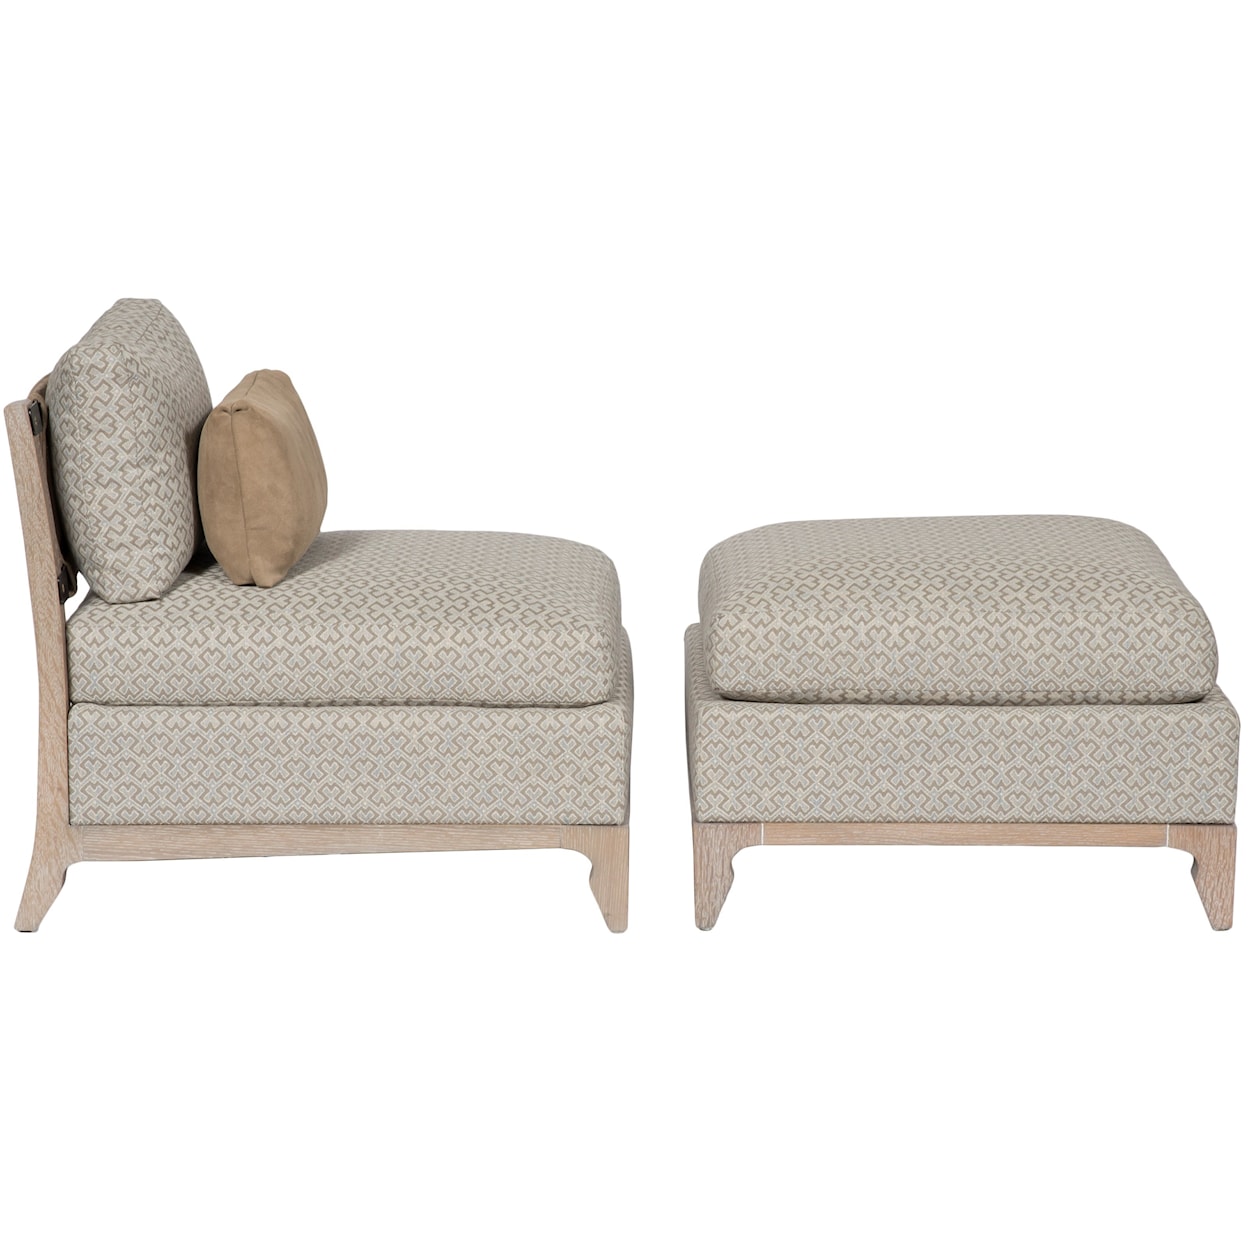 Vanguard Furniture Gifford by Thom Filicia Home Armless Chair